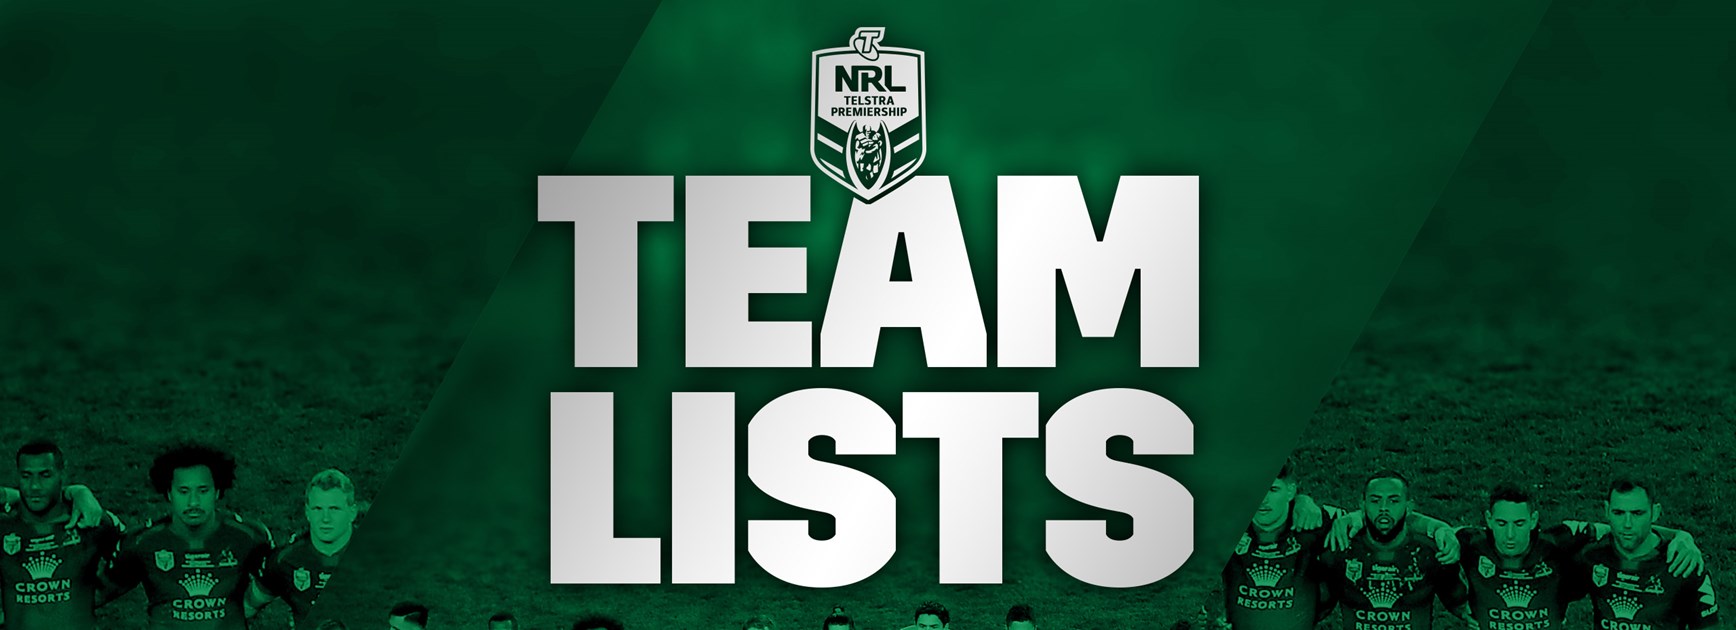 Predicted round 13 NRL team changes